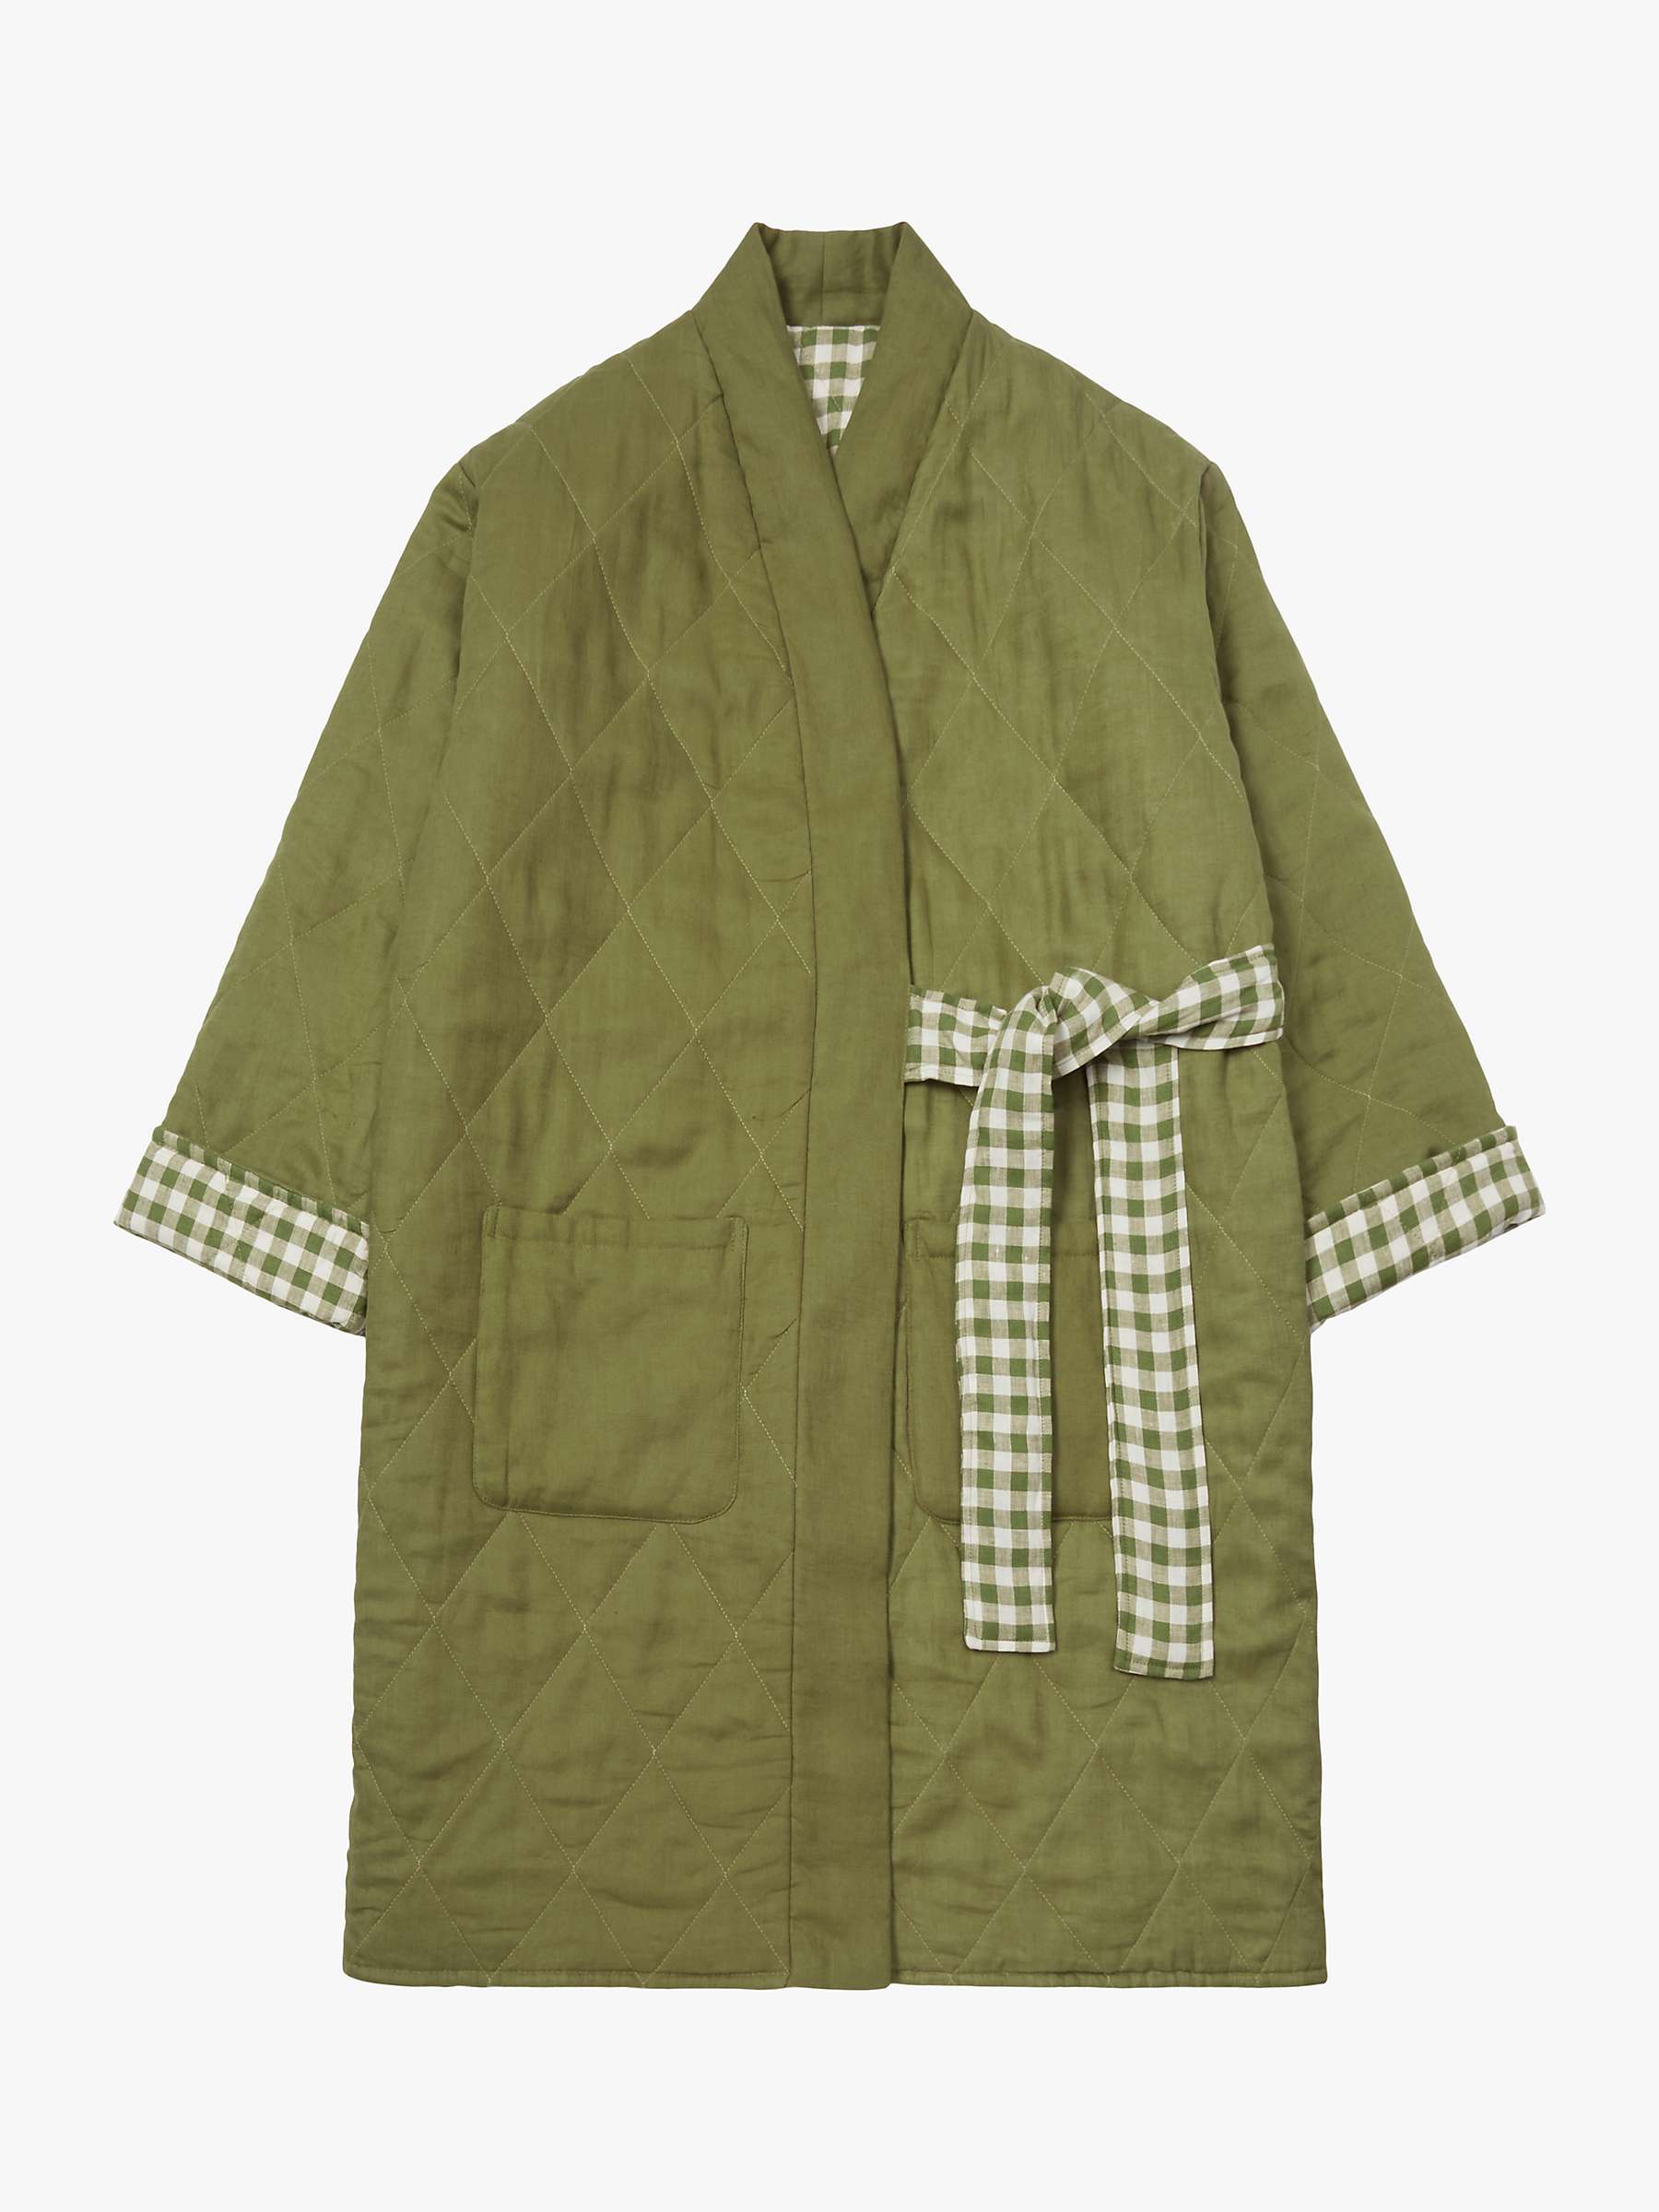 Buy Piglet in Bed Reversible Gingham Linen Housecoat Dressing Gown Online at johnlewis.com